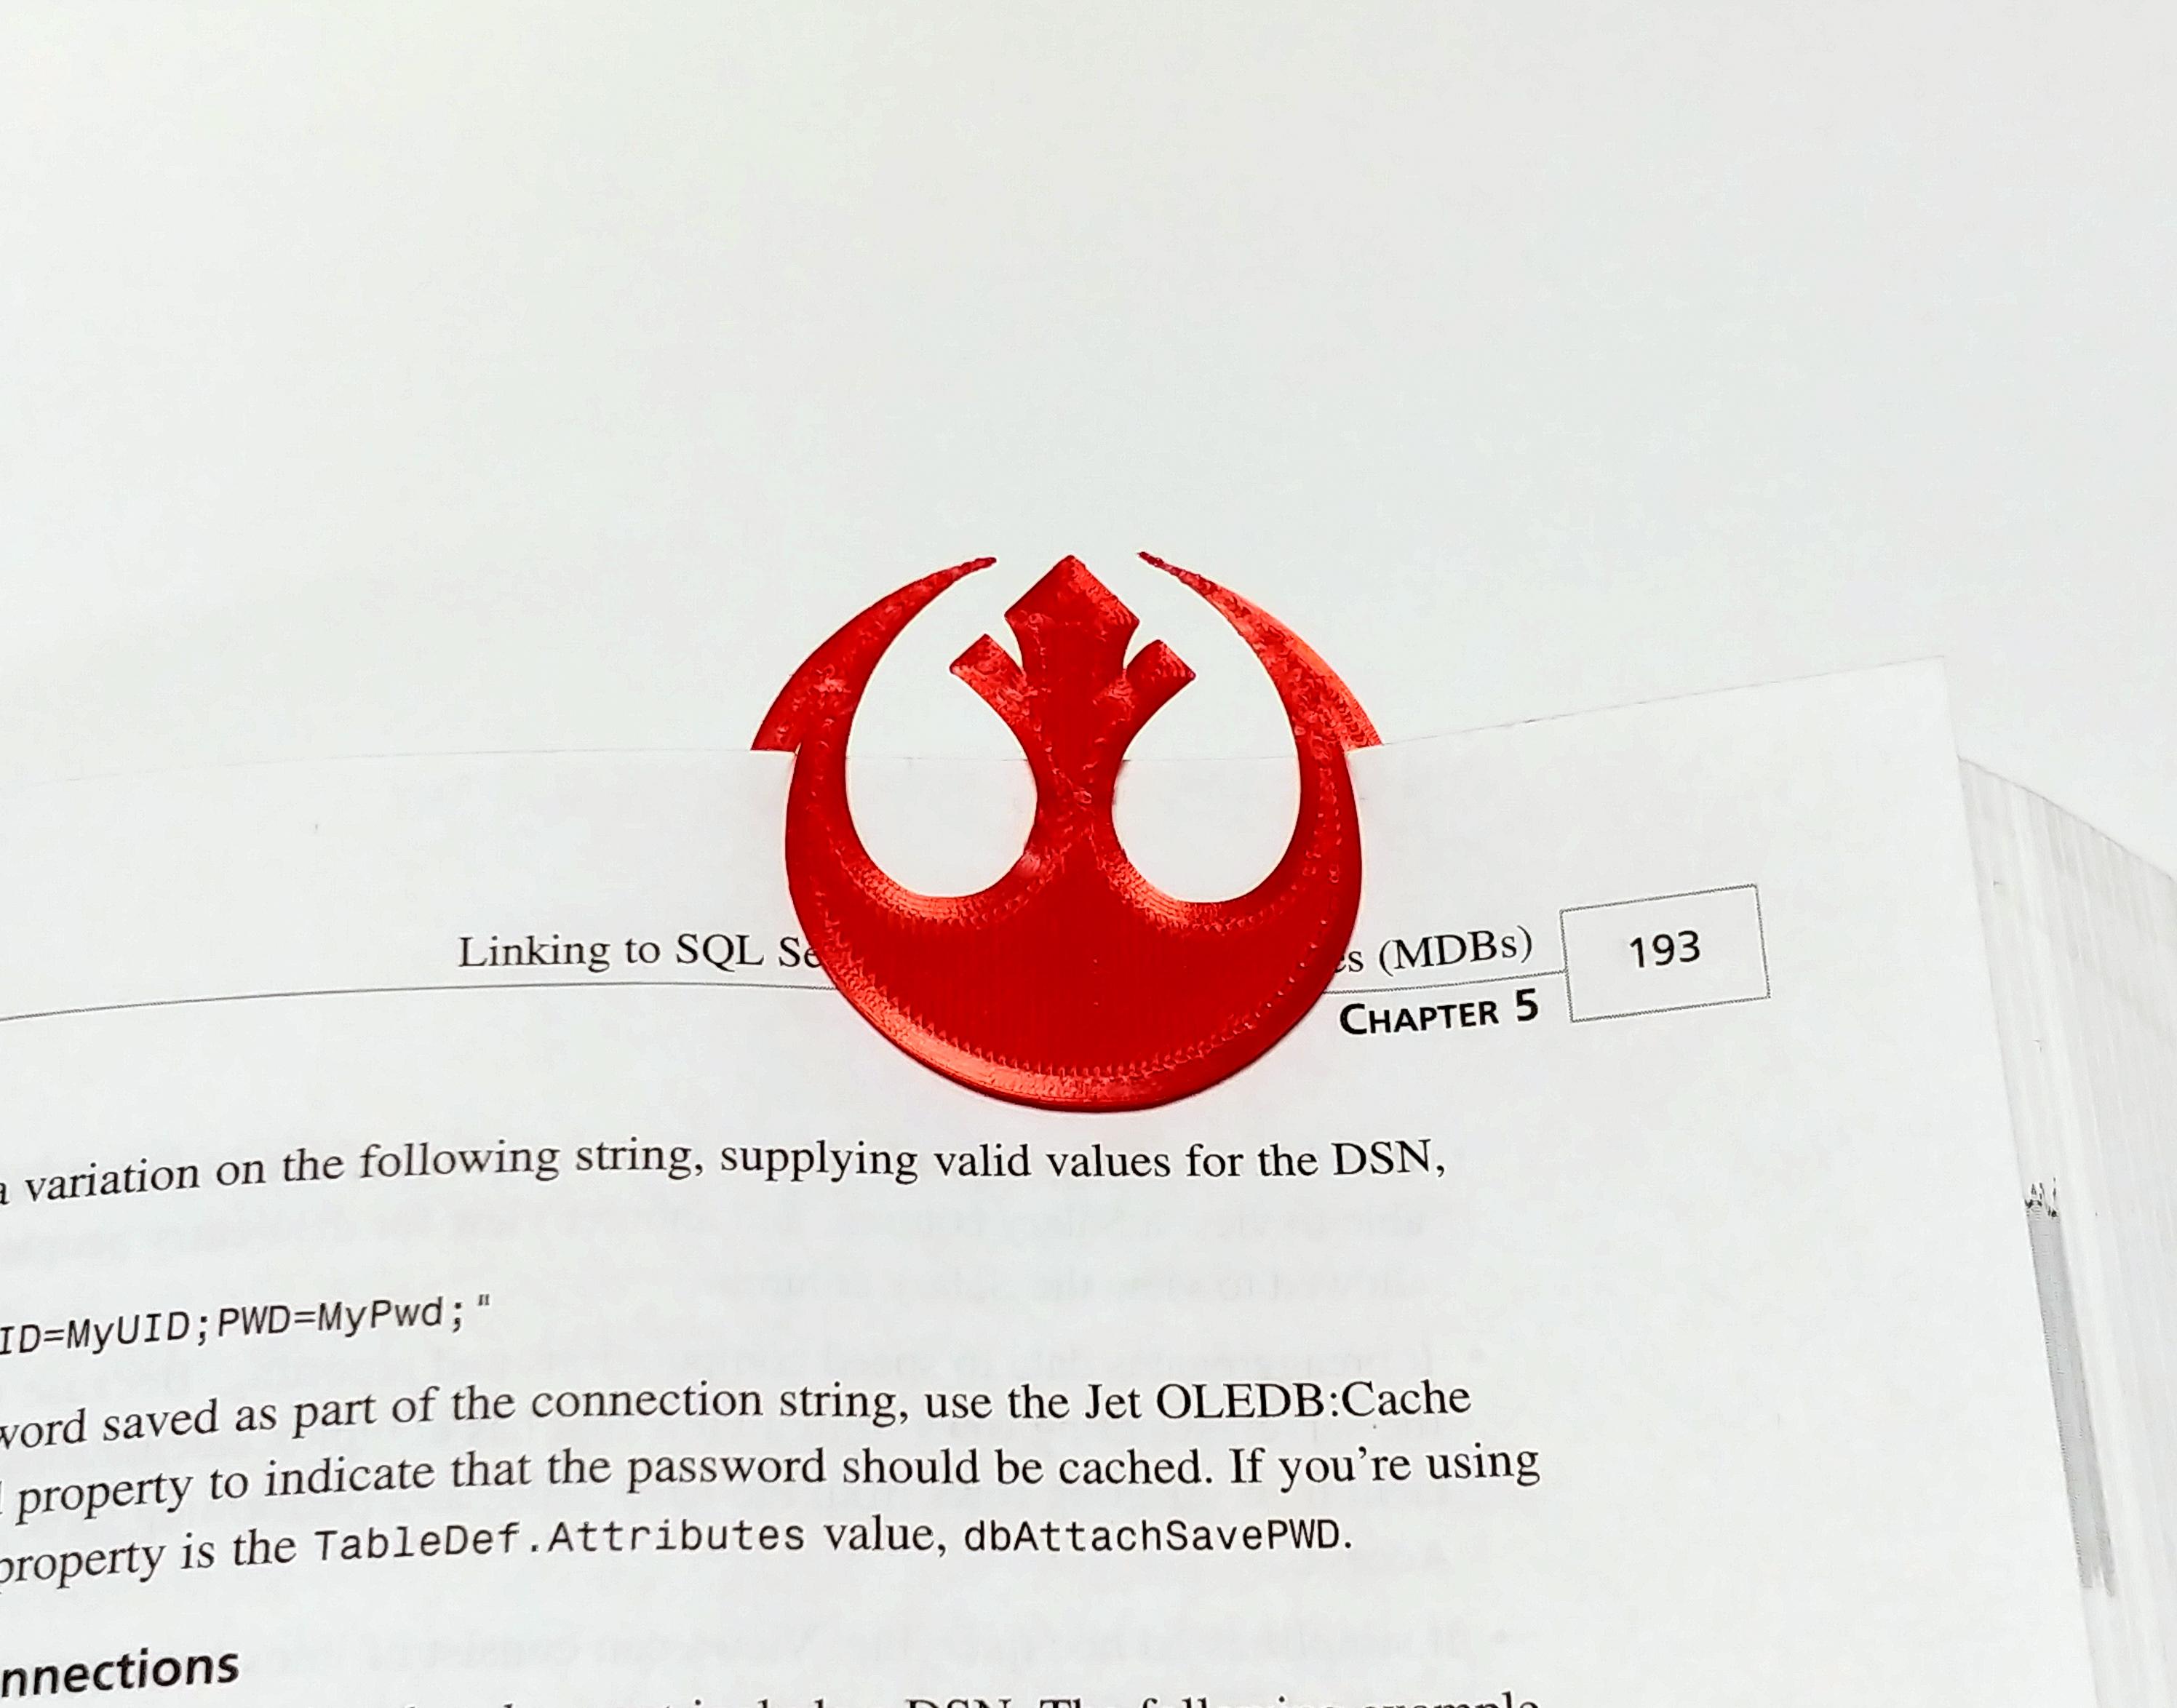 Star Wars Rebel Symbol Bookmark 3d model